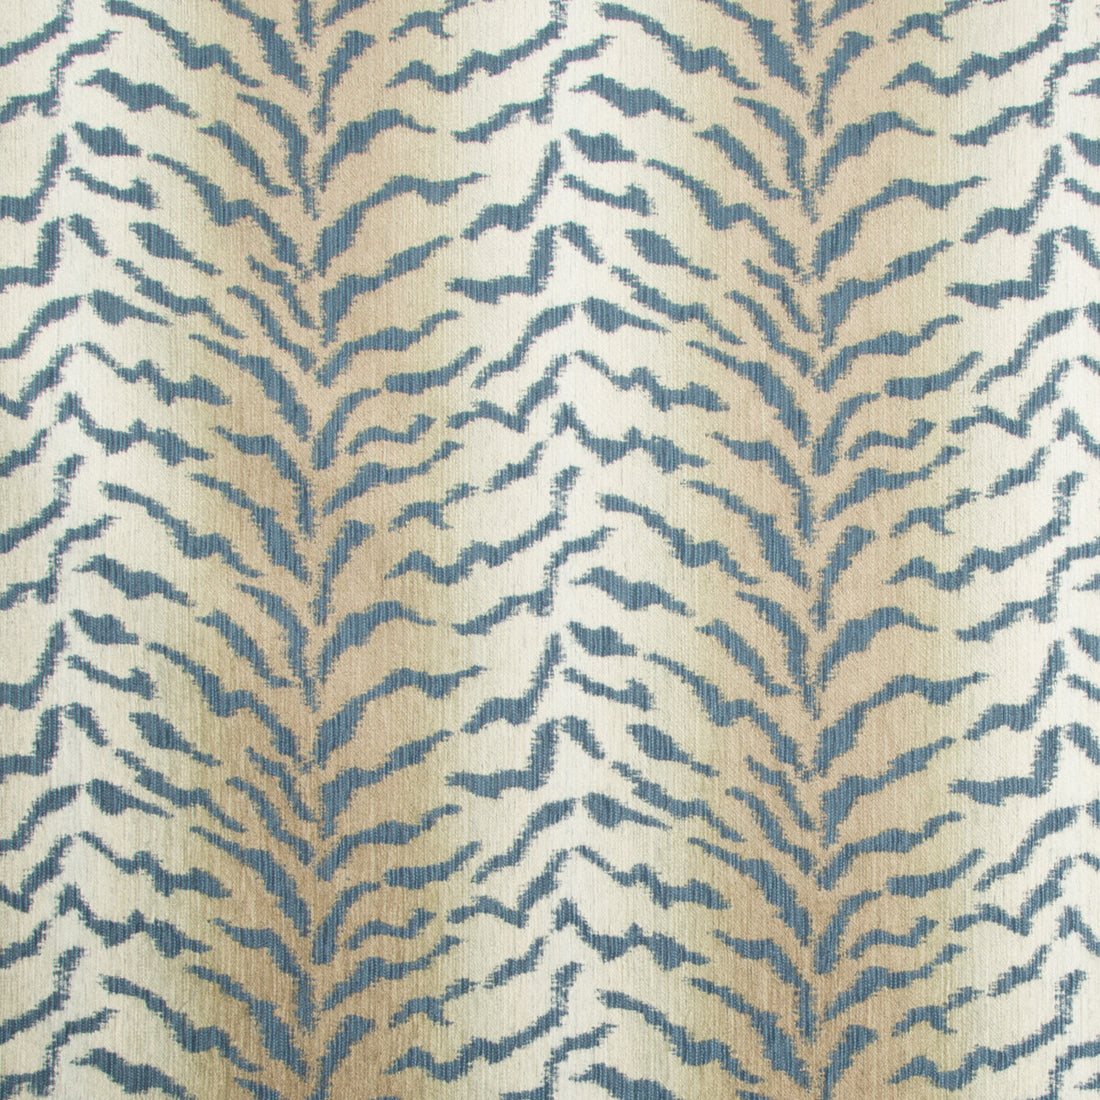 Kravet Design fabric in 34715-15 color - pattern 34715.15.0 - by Kravet Design in the Gis collection